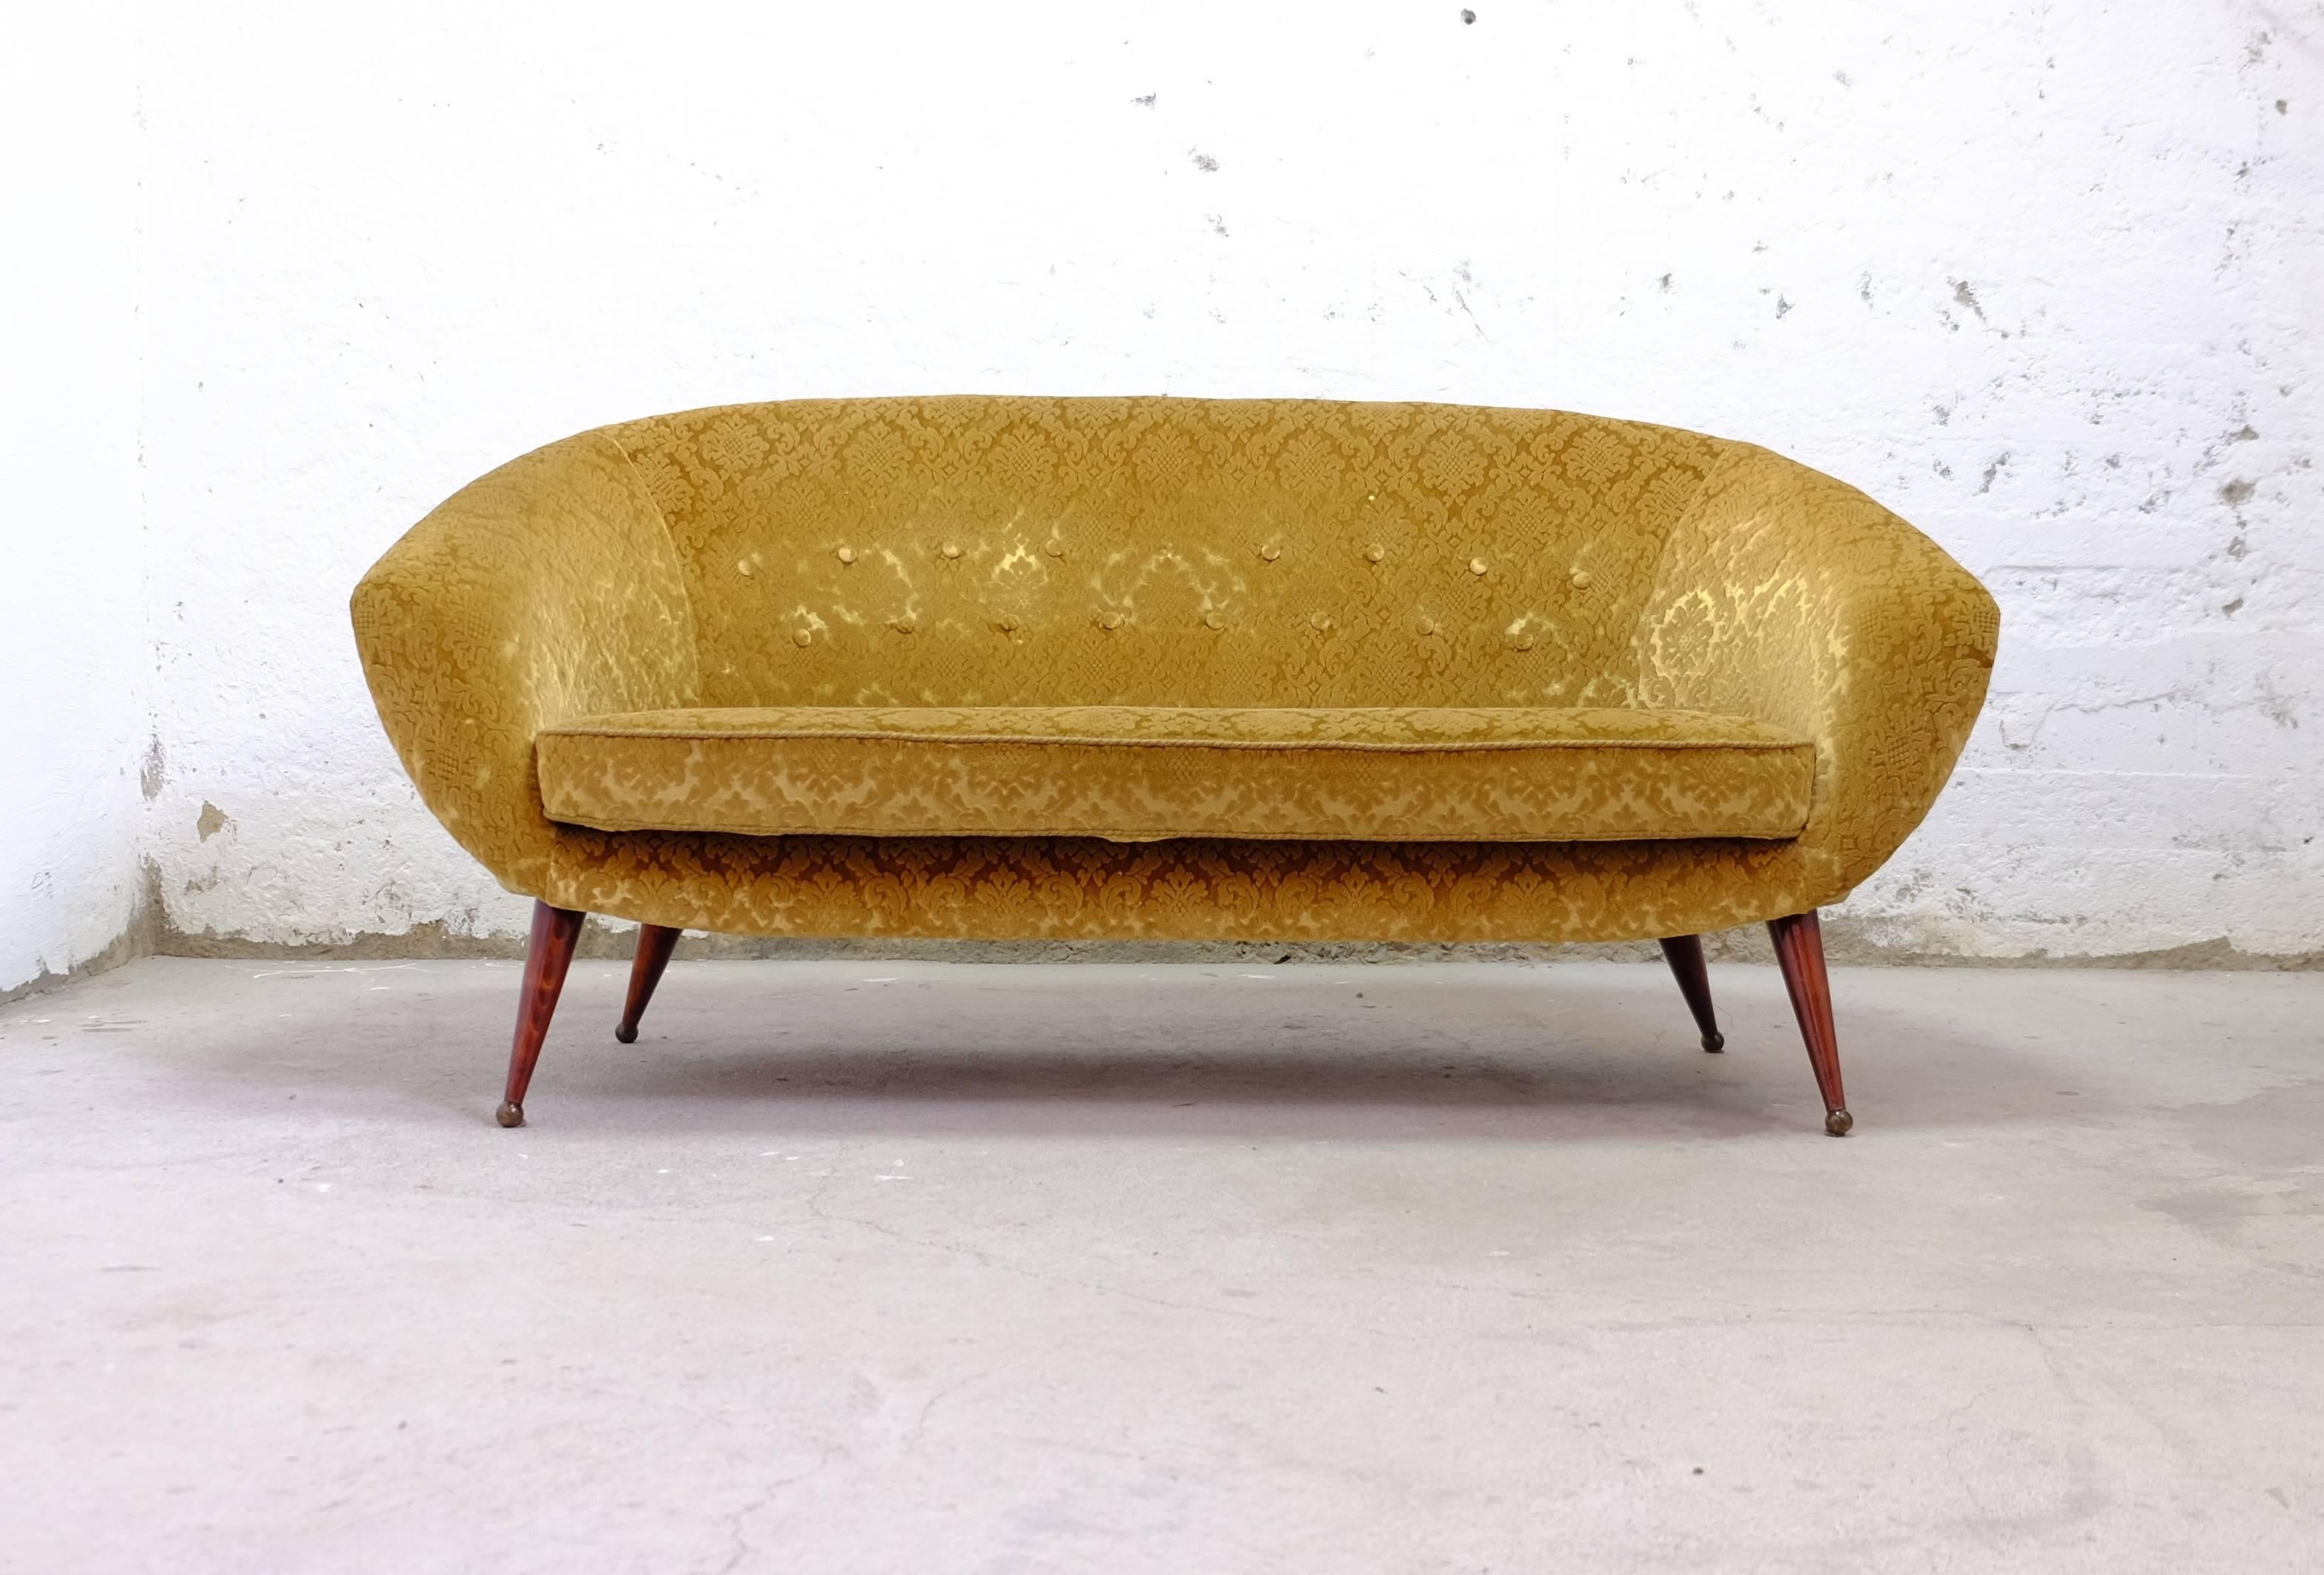 Fantastic Swedish sofa by Folke Jansson, 1950s.
Original fabric, beech legs and brass feet.
Produced by S.M Wincrantz in Skovde, Sweden.